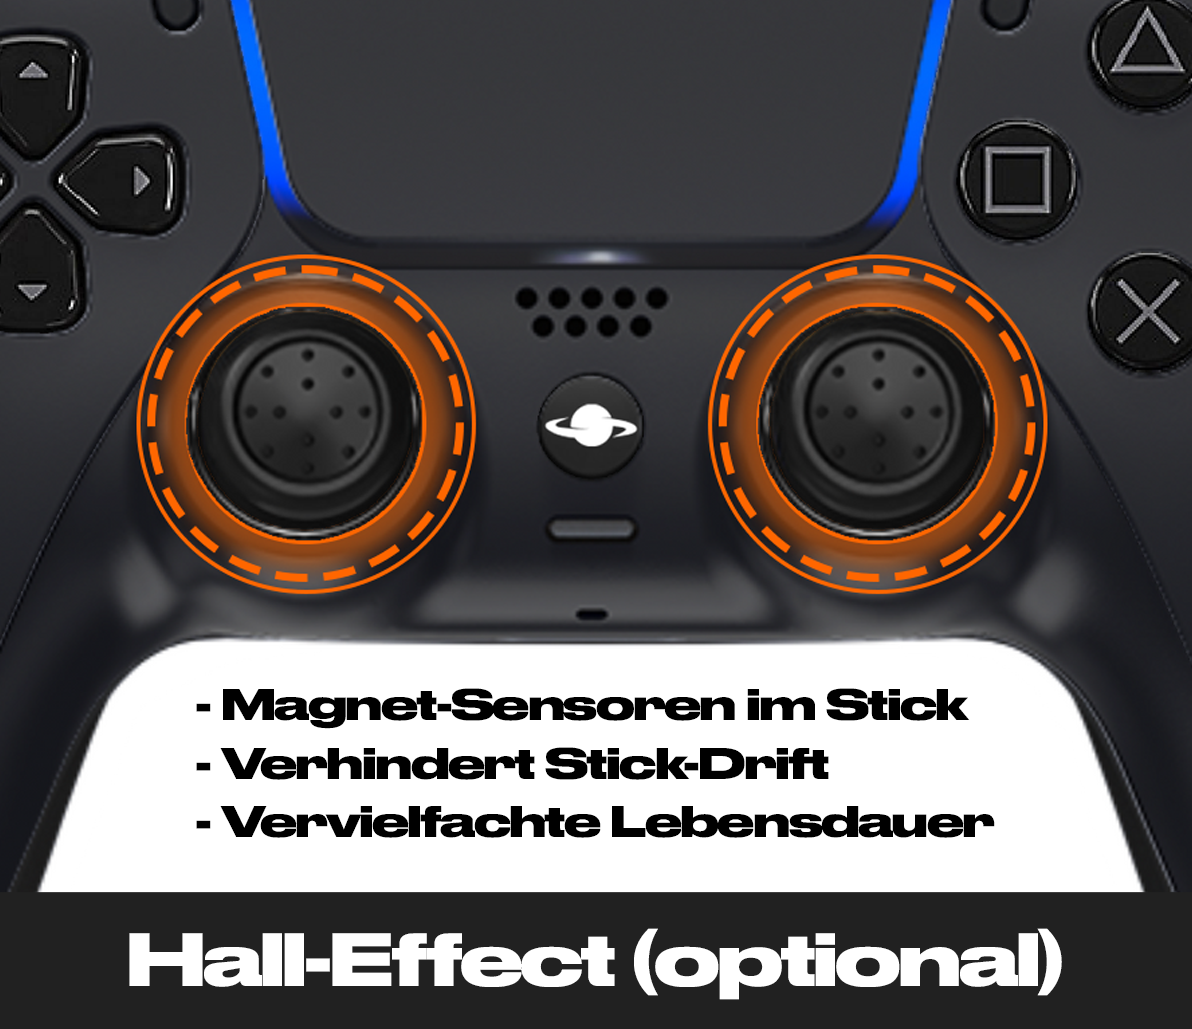 PS5 Custom Controller 'Illusion'